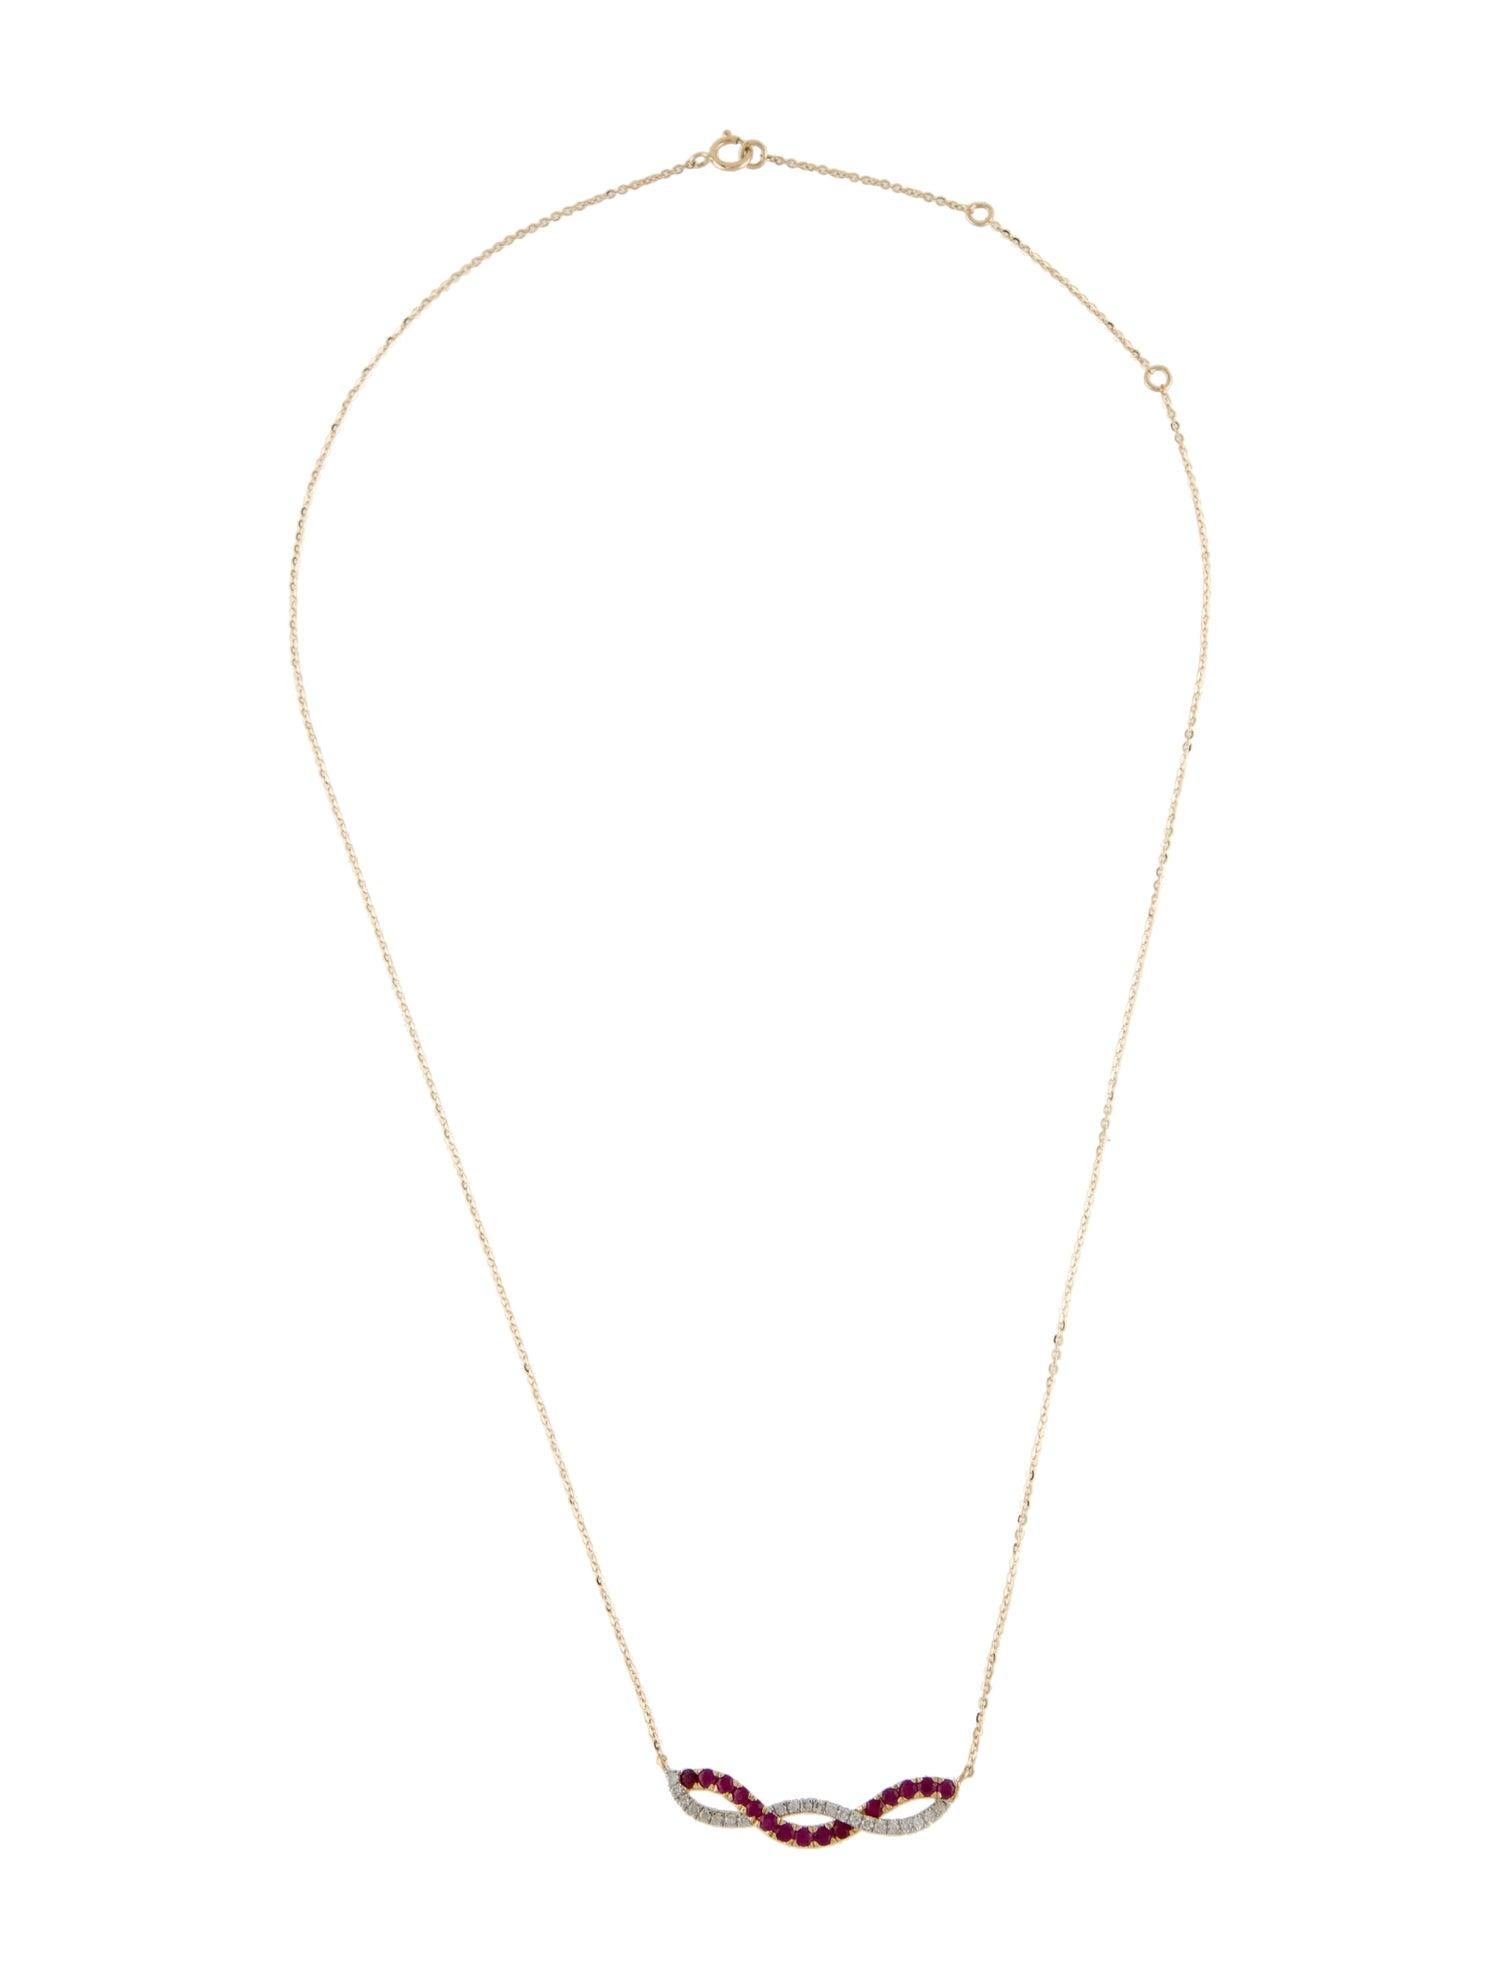 Brilliant Cut Luxury 14K Ruby & Diamond Pendant Necklace - Elegant Gemstone, Statement Jewelry For Sale